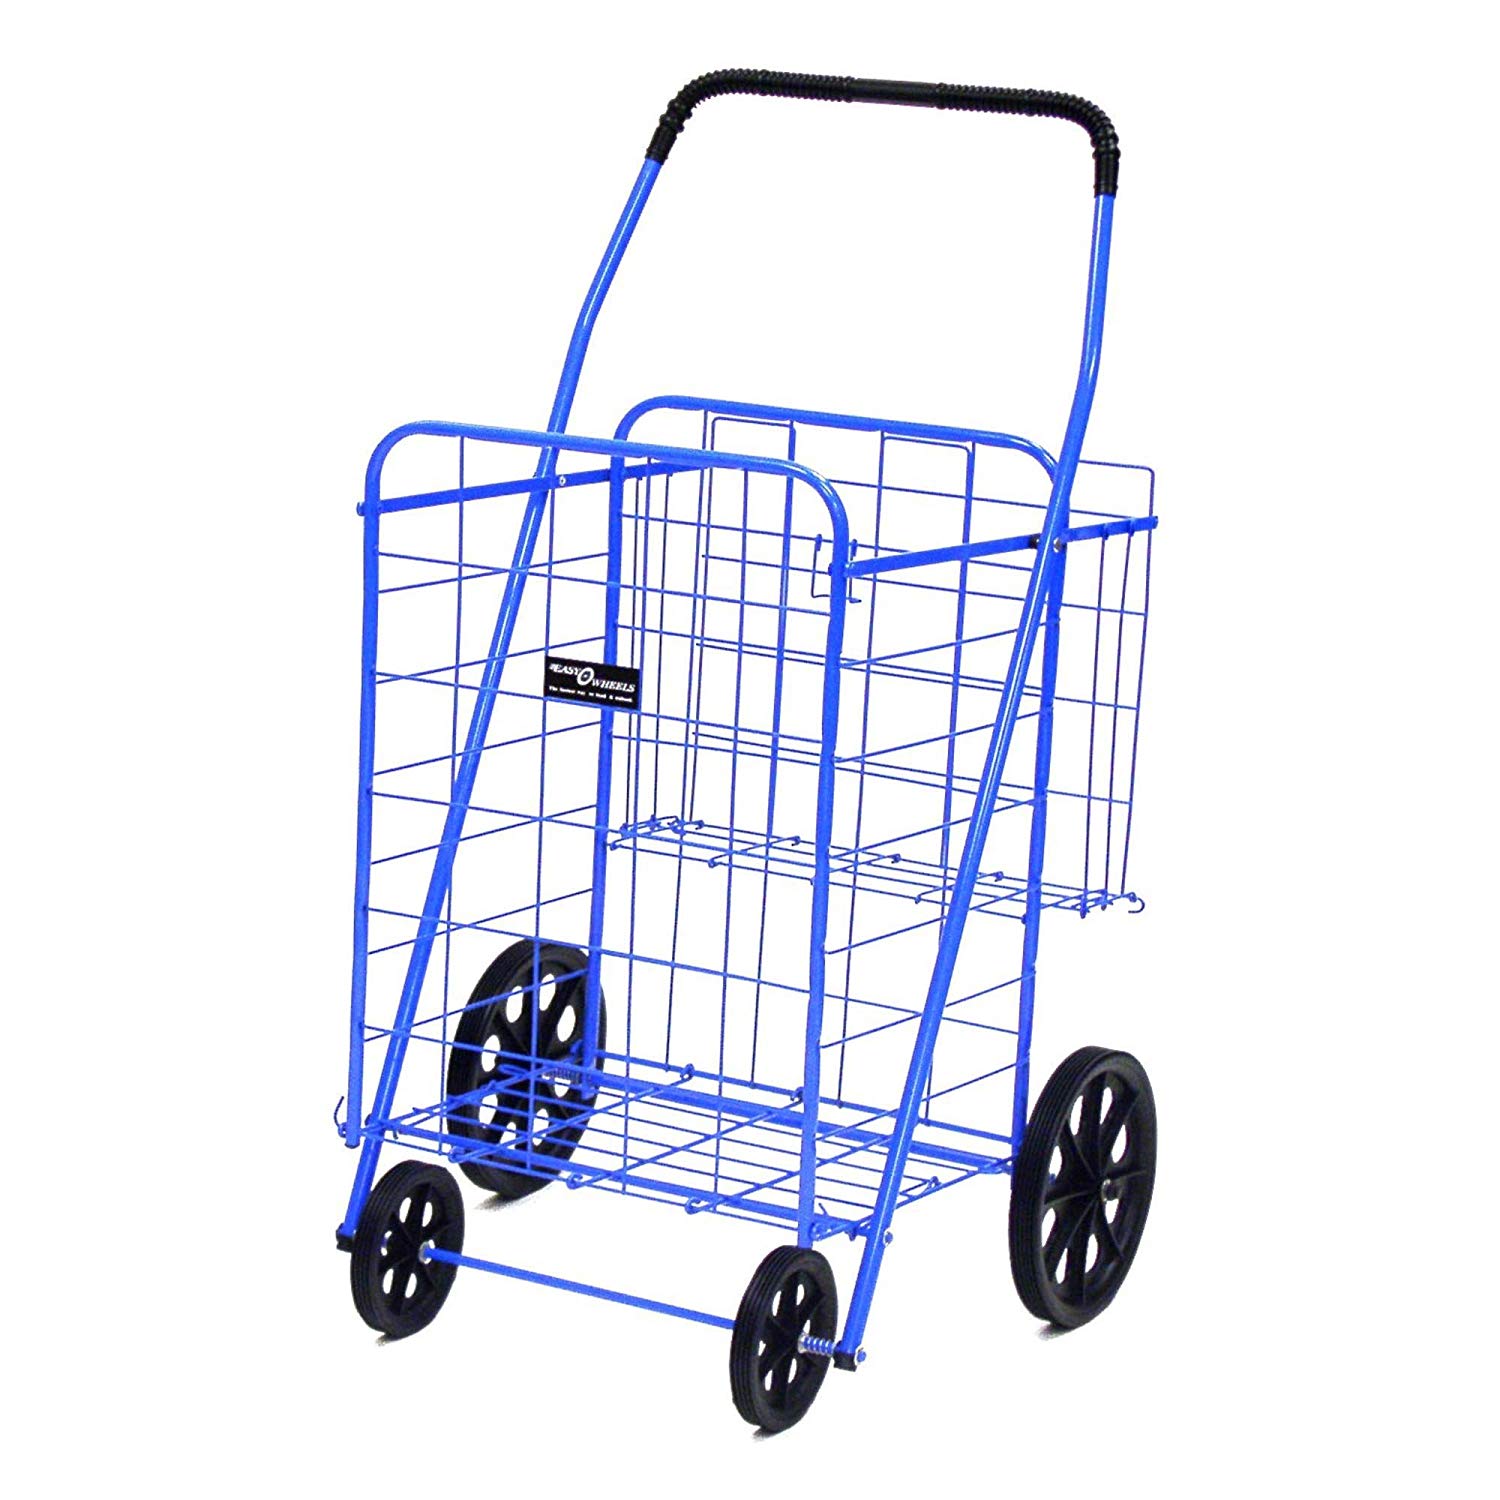 Easy Wheels Jumbo Shopping Cart Plus - Multiple Colors - image 1 of 3